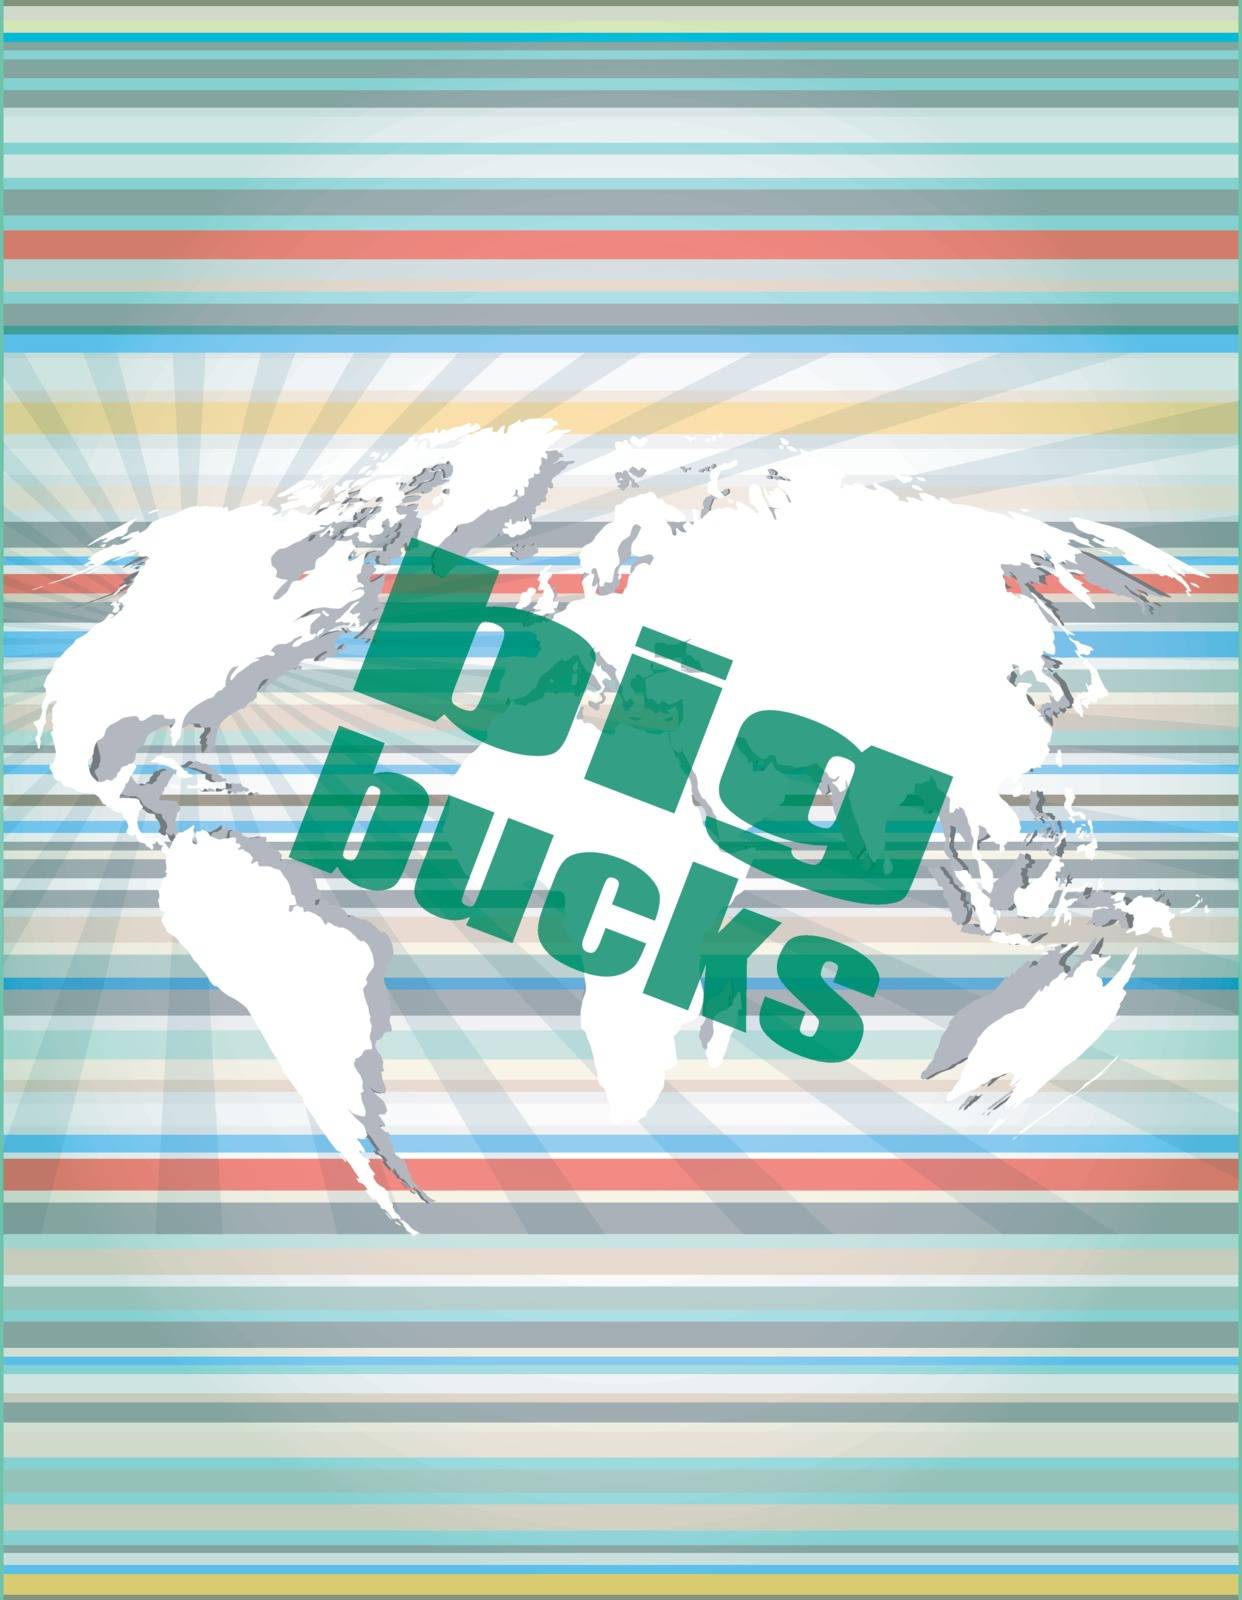 big bucks words on digital touch screen vector illustration